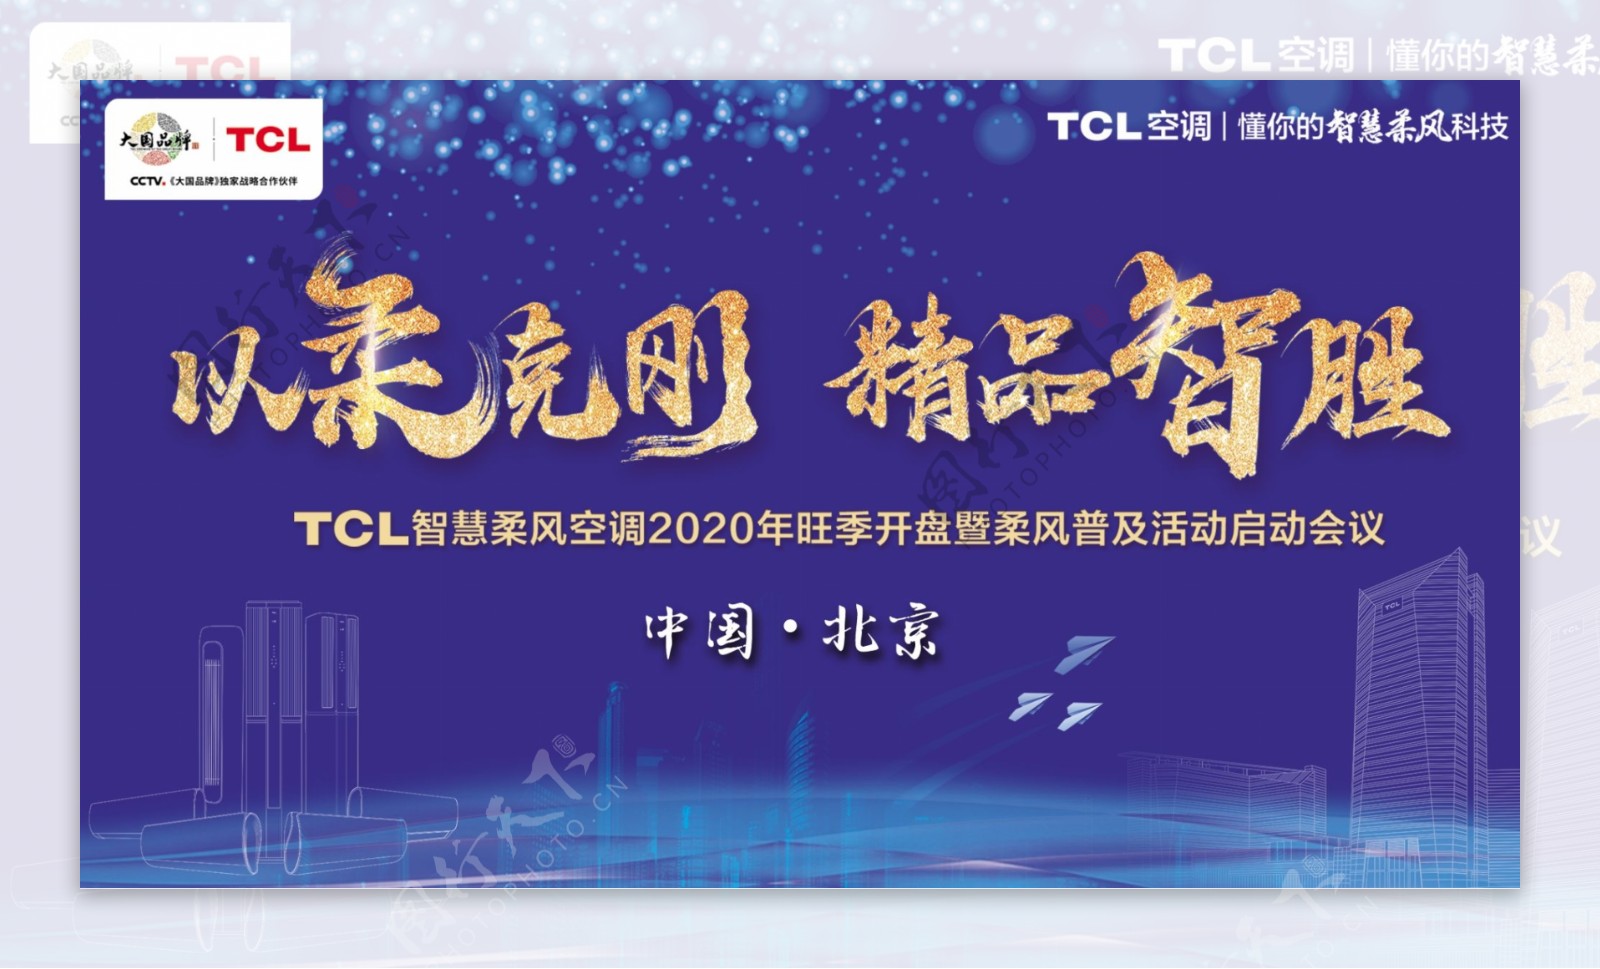 TCL空调大国品牌智慧柔风